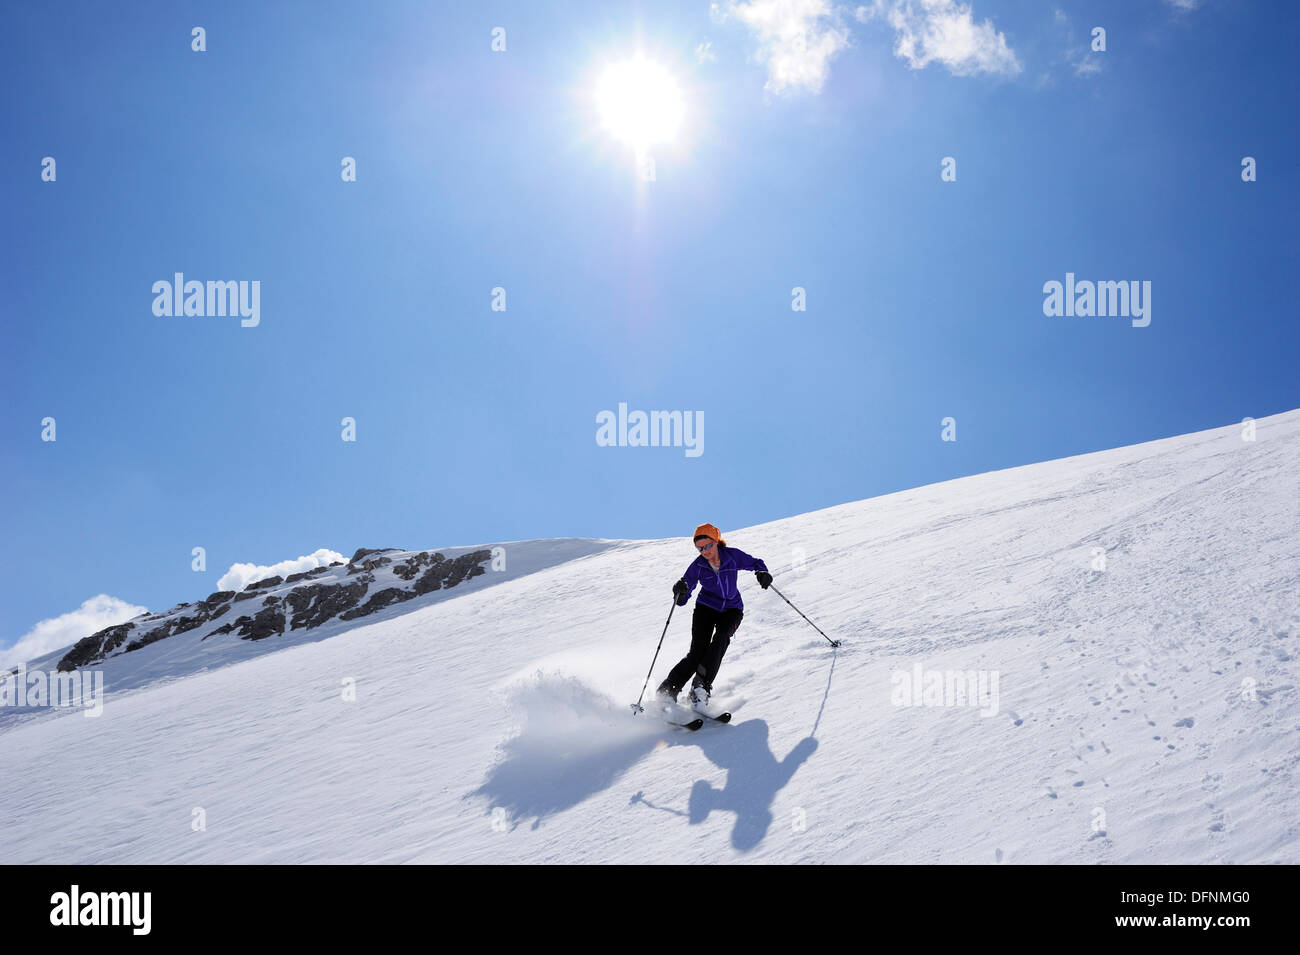 Woman backcountry skiing, descending on snow face, Schesaplana, Raetikon, Montafon, Vorarlberg, Austria Stock Photo